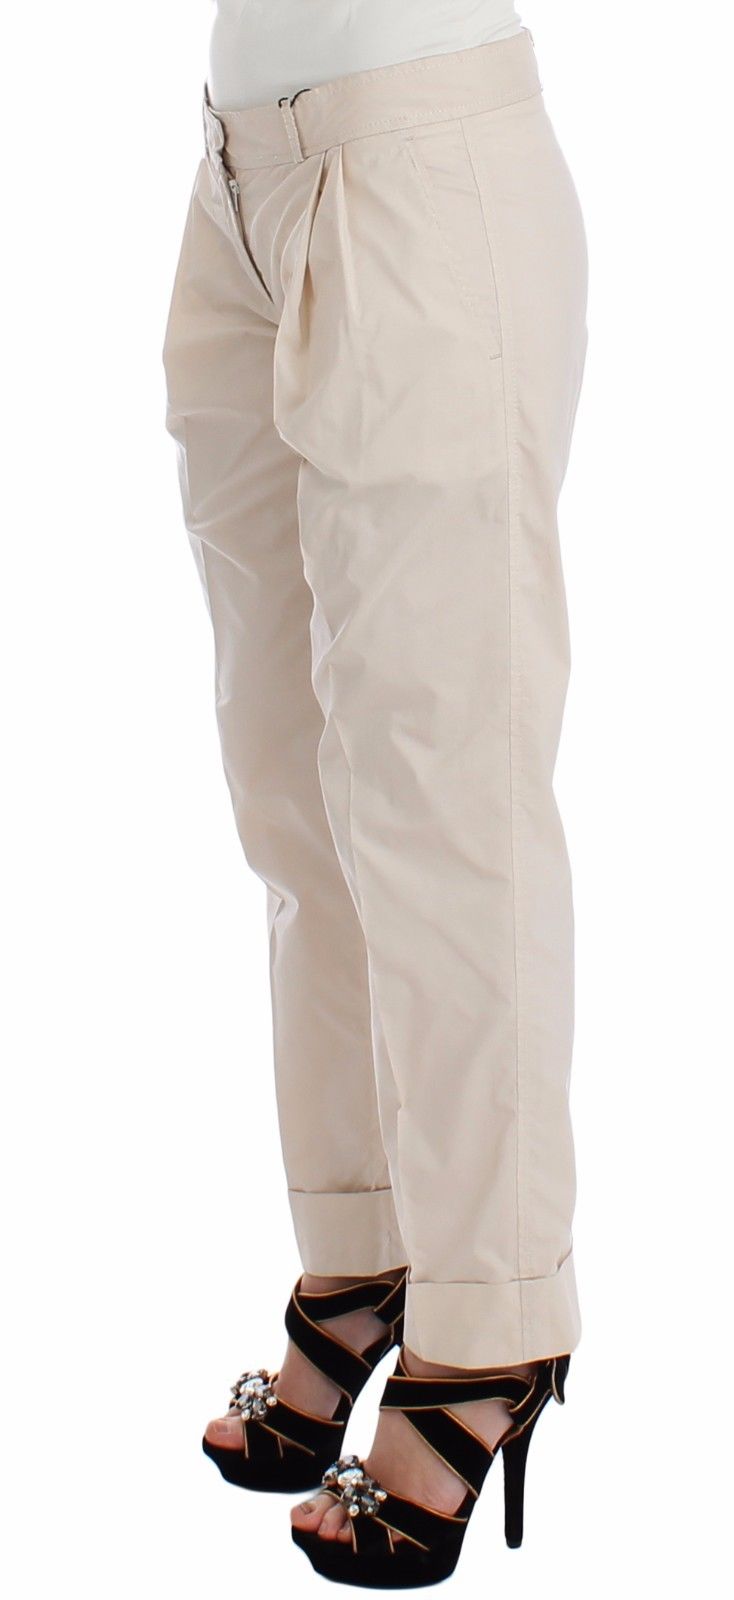 Beige Chinos Casual Dress Pants Khakis - Avaz Shop